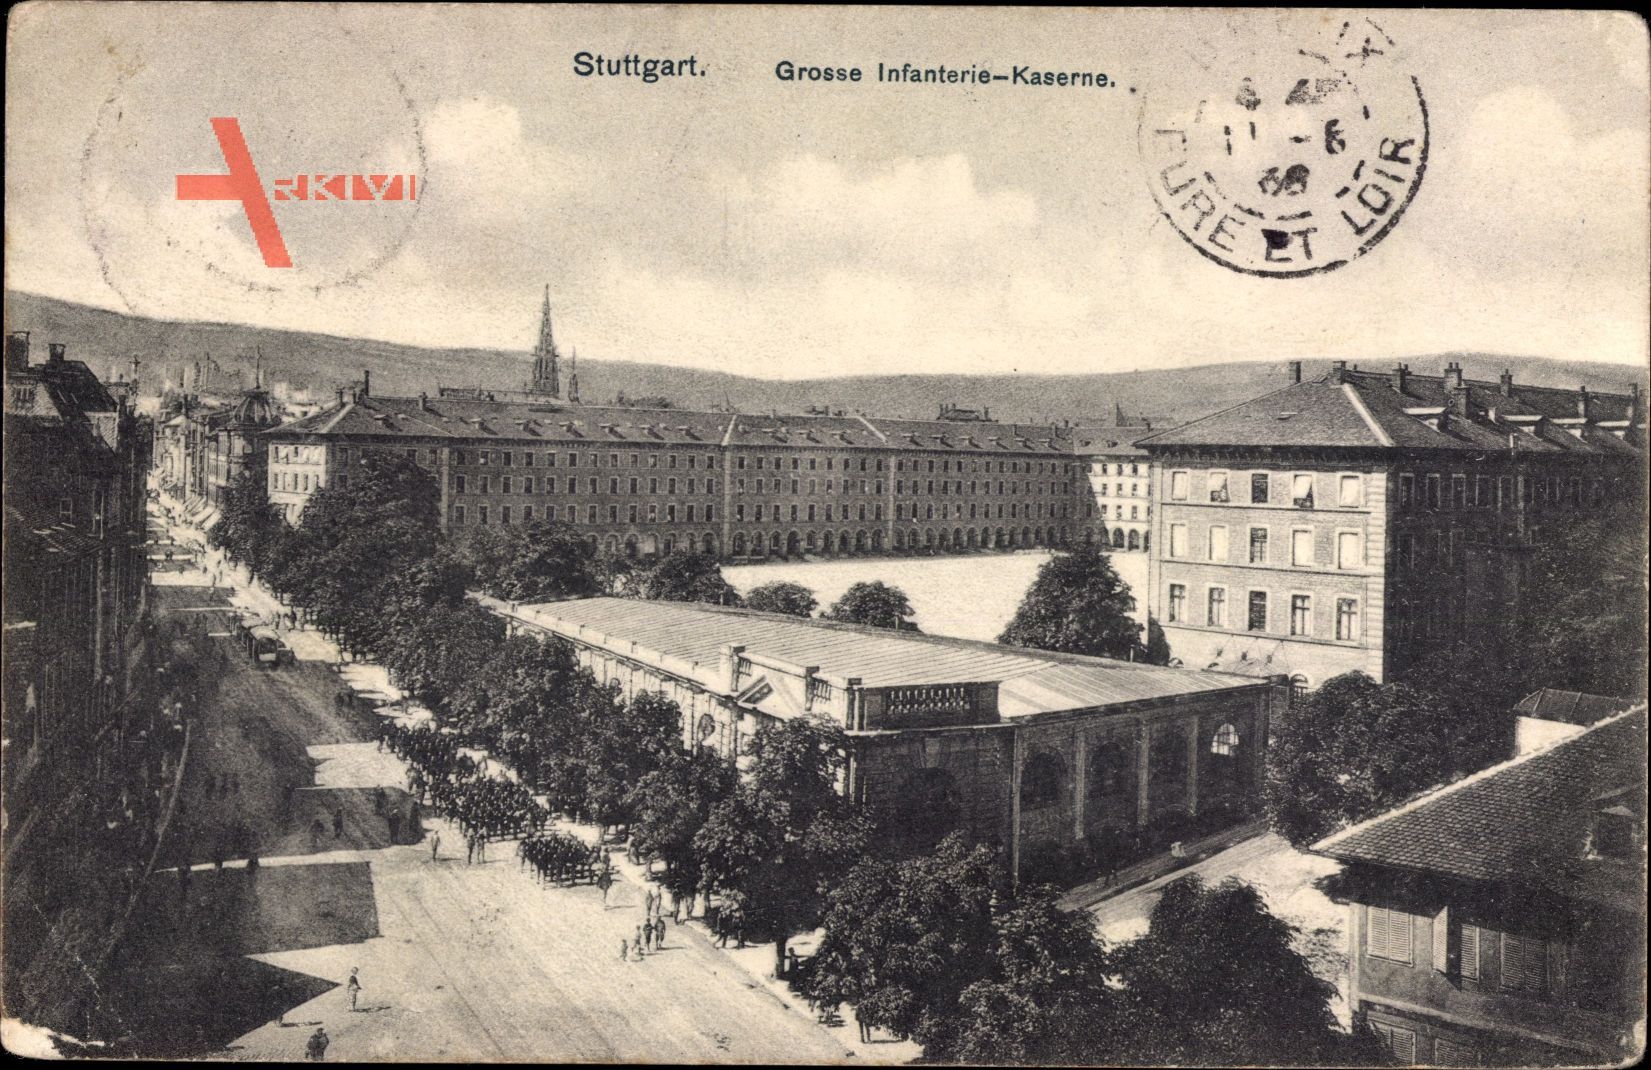 Stuttgart in Baden Württemberg, Große Infanterie Kaserne